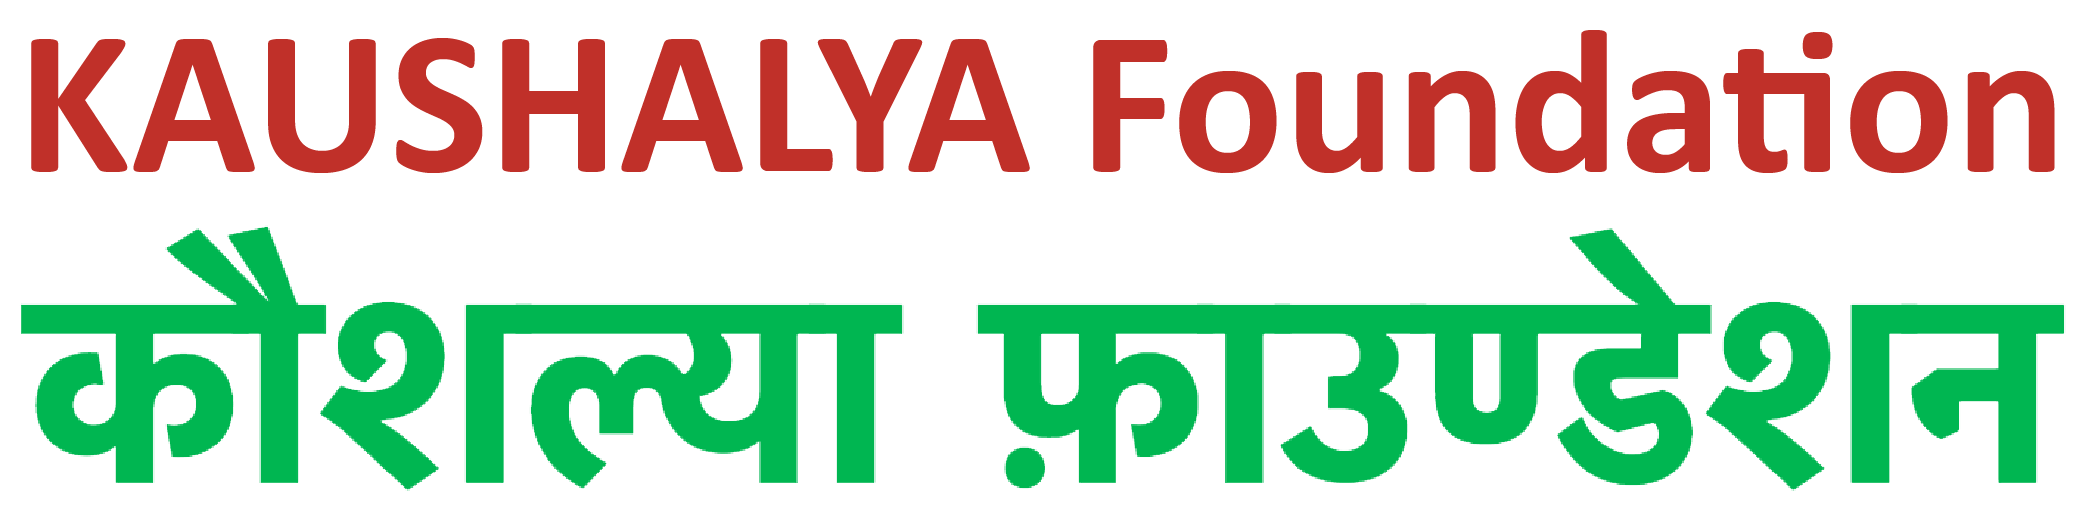 Kaushalya Foundation